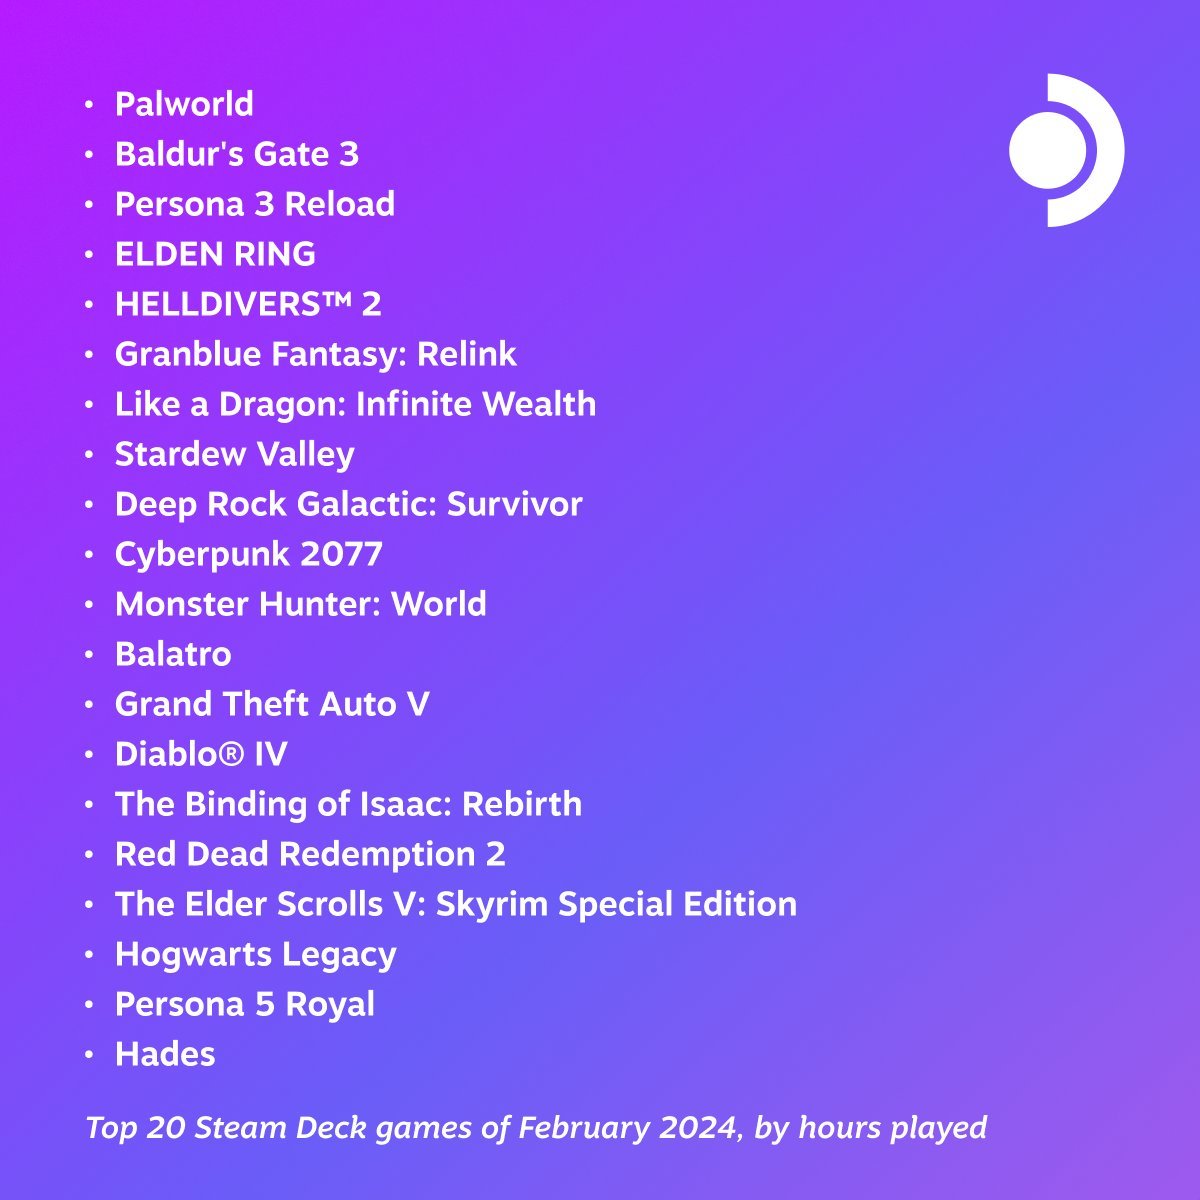 Steam Deck 掌机公布 2 月最受欢迎游戏：《幻兽帕鲁》登顶